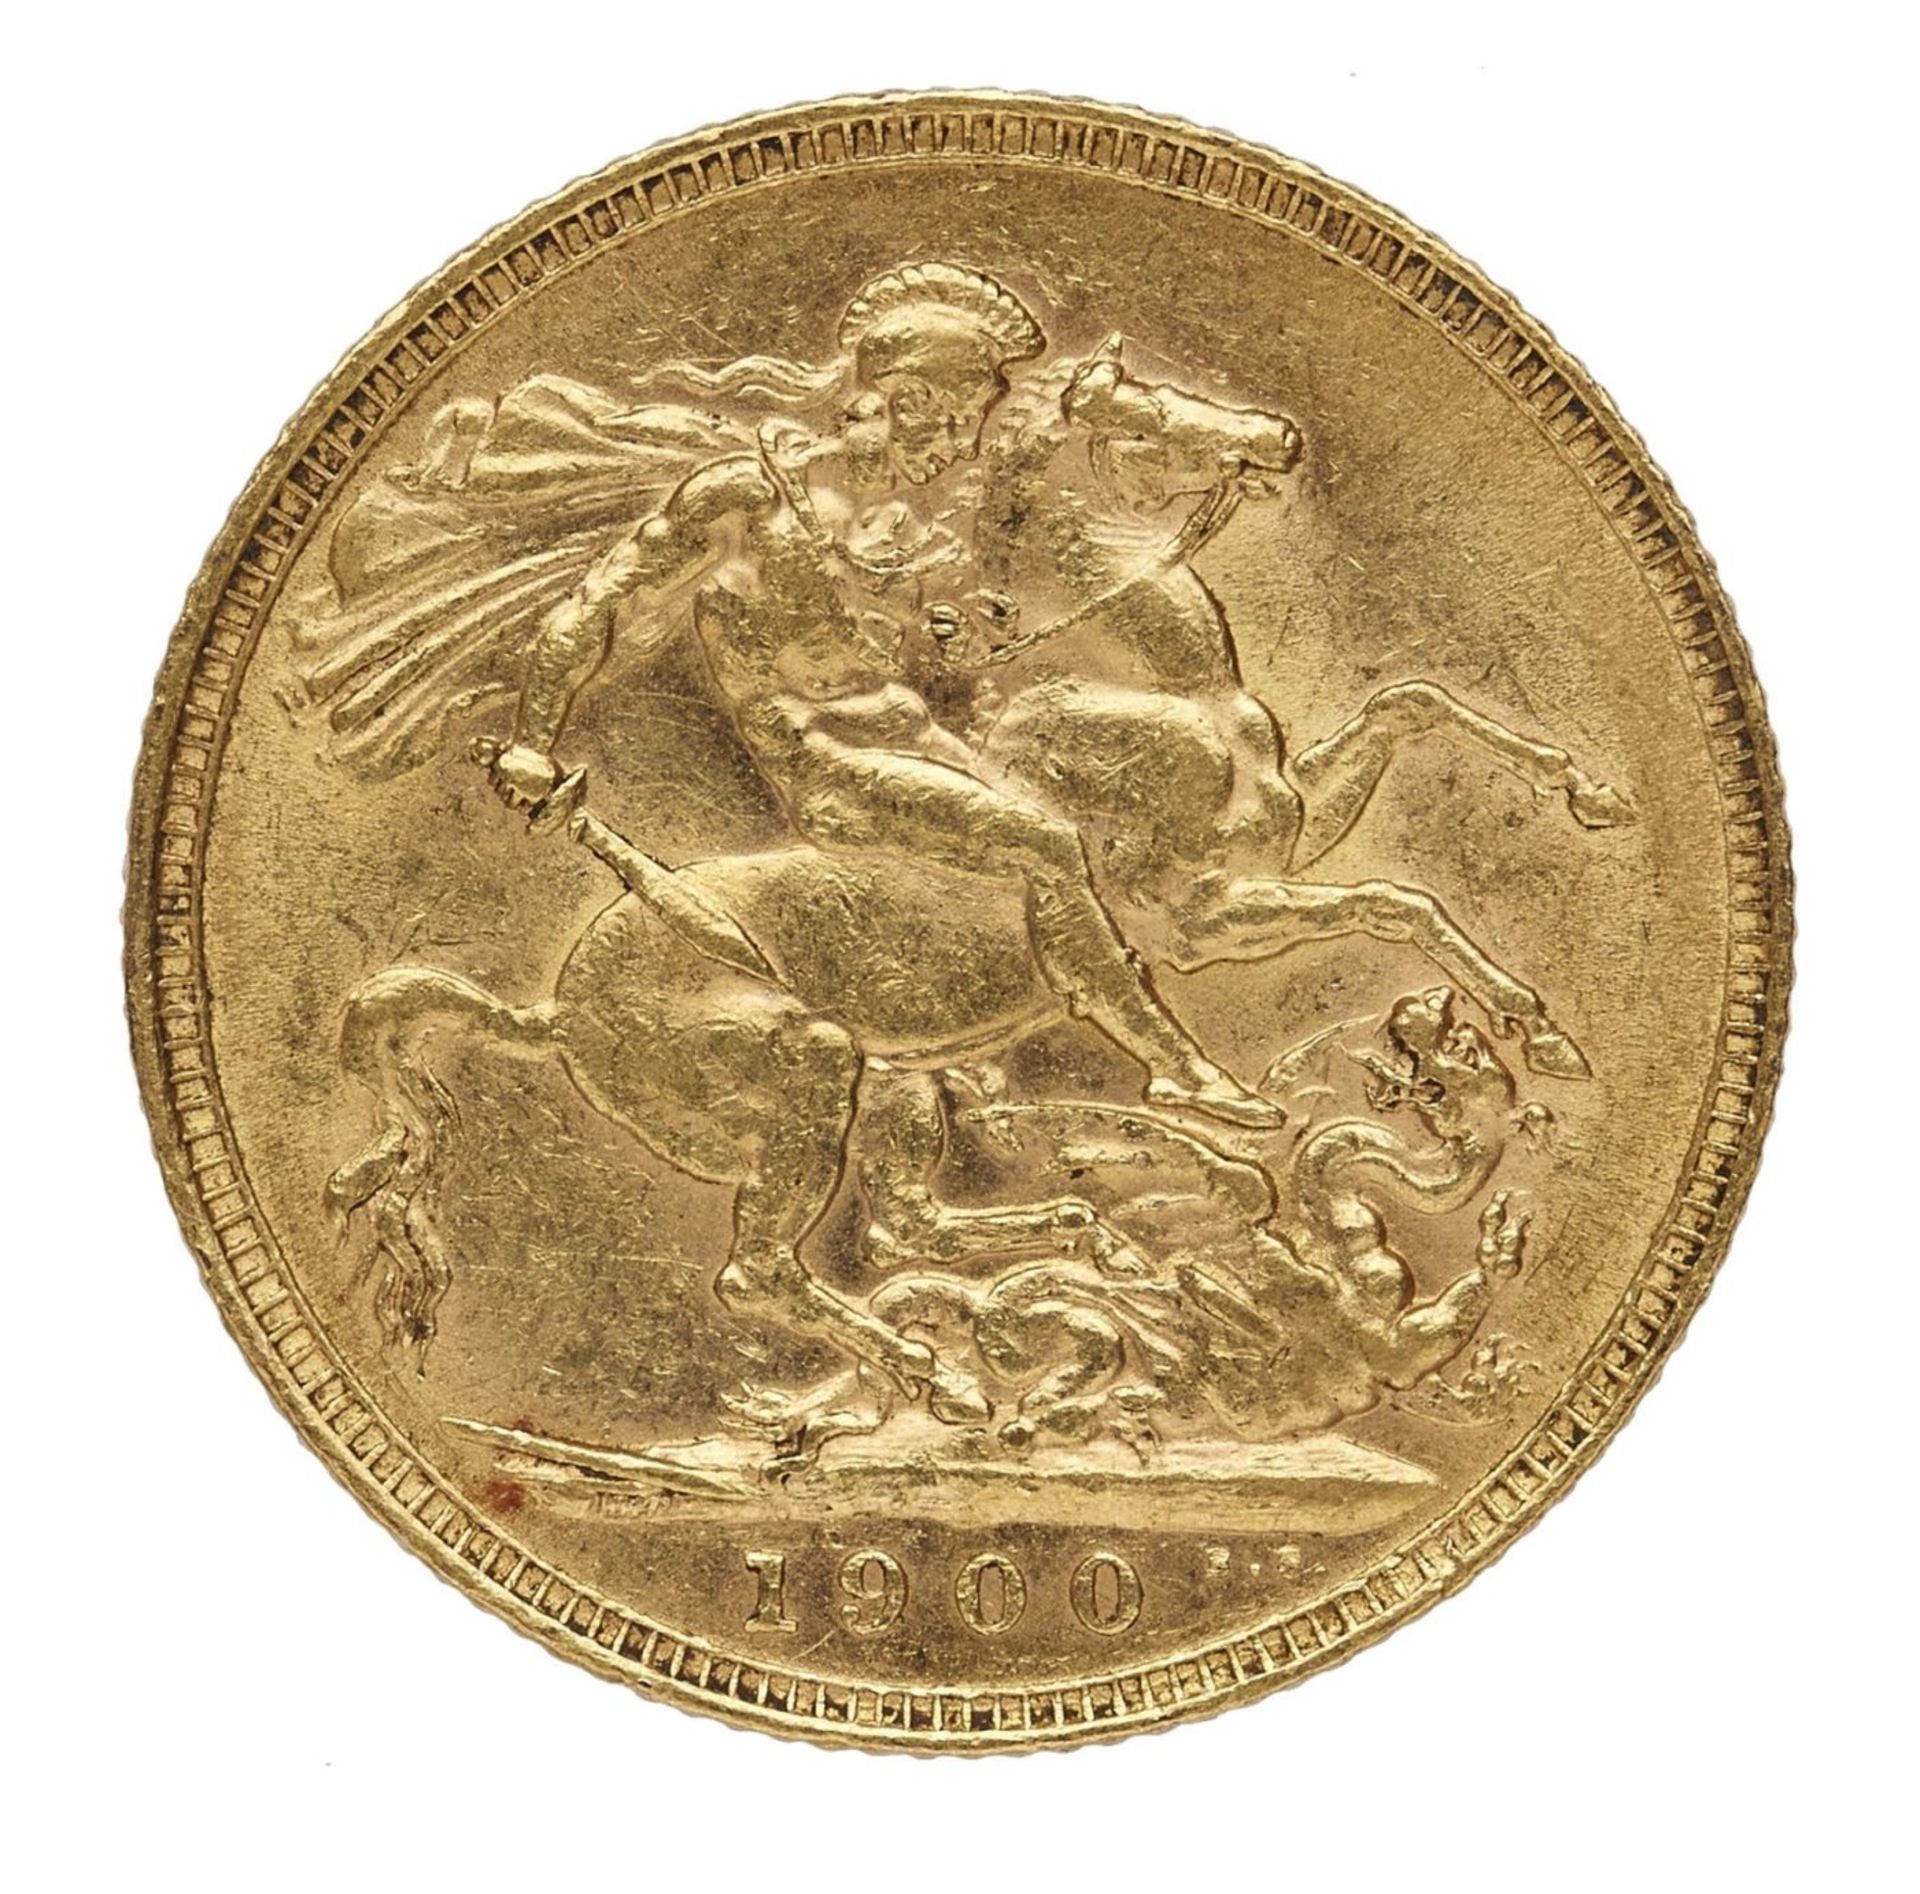 Goldmünze Sovereign, Queen Victoria, England 1900 - Image 2 of 2